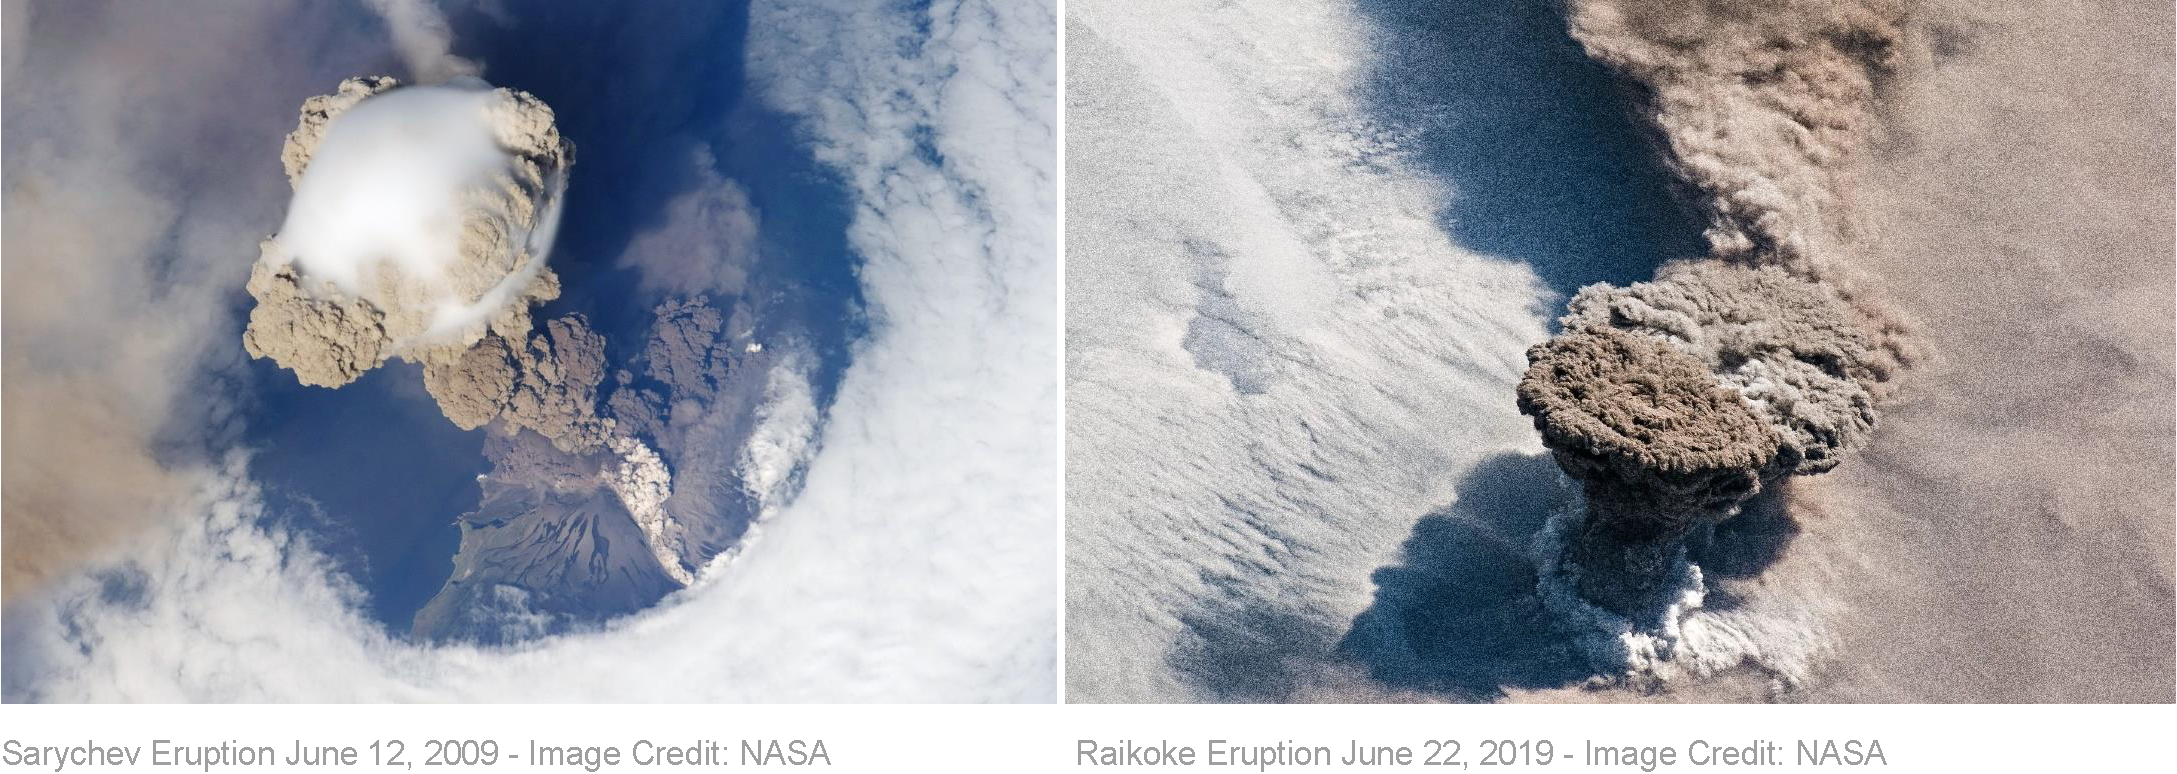 Sarychev Eruption June 12, 2009 and Raikoke Eruption June 22, 2019 Image Credits: NASA